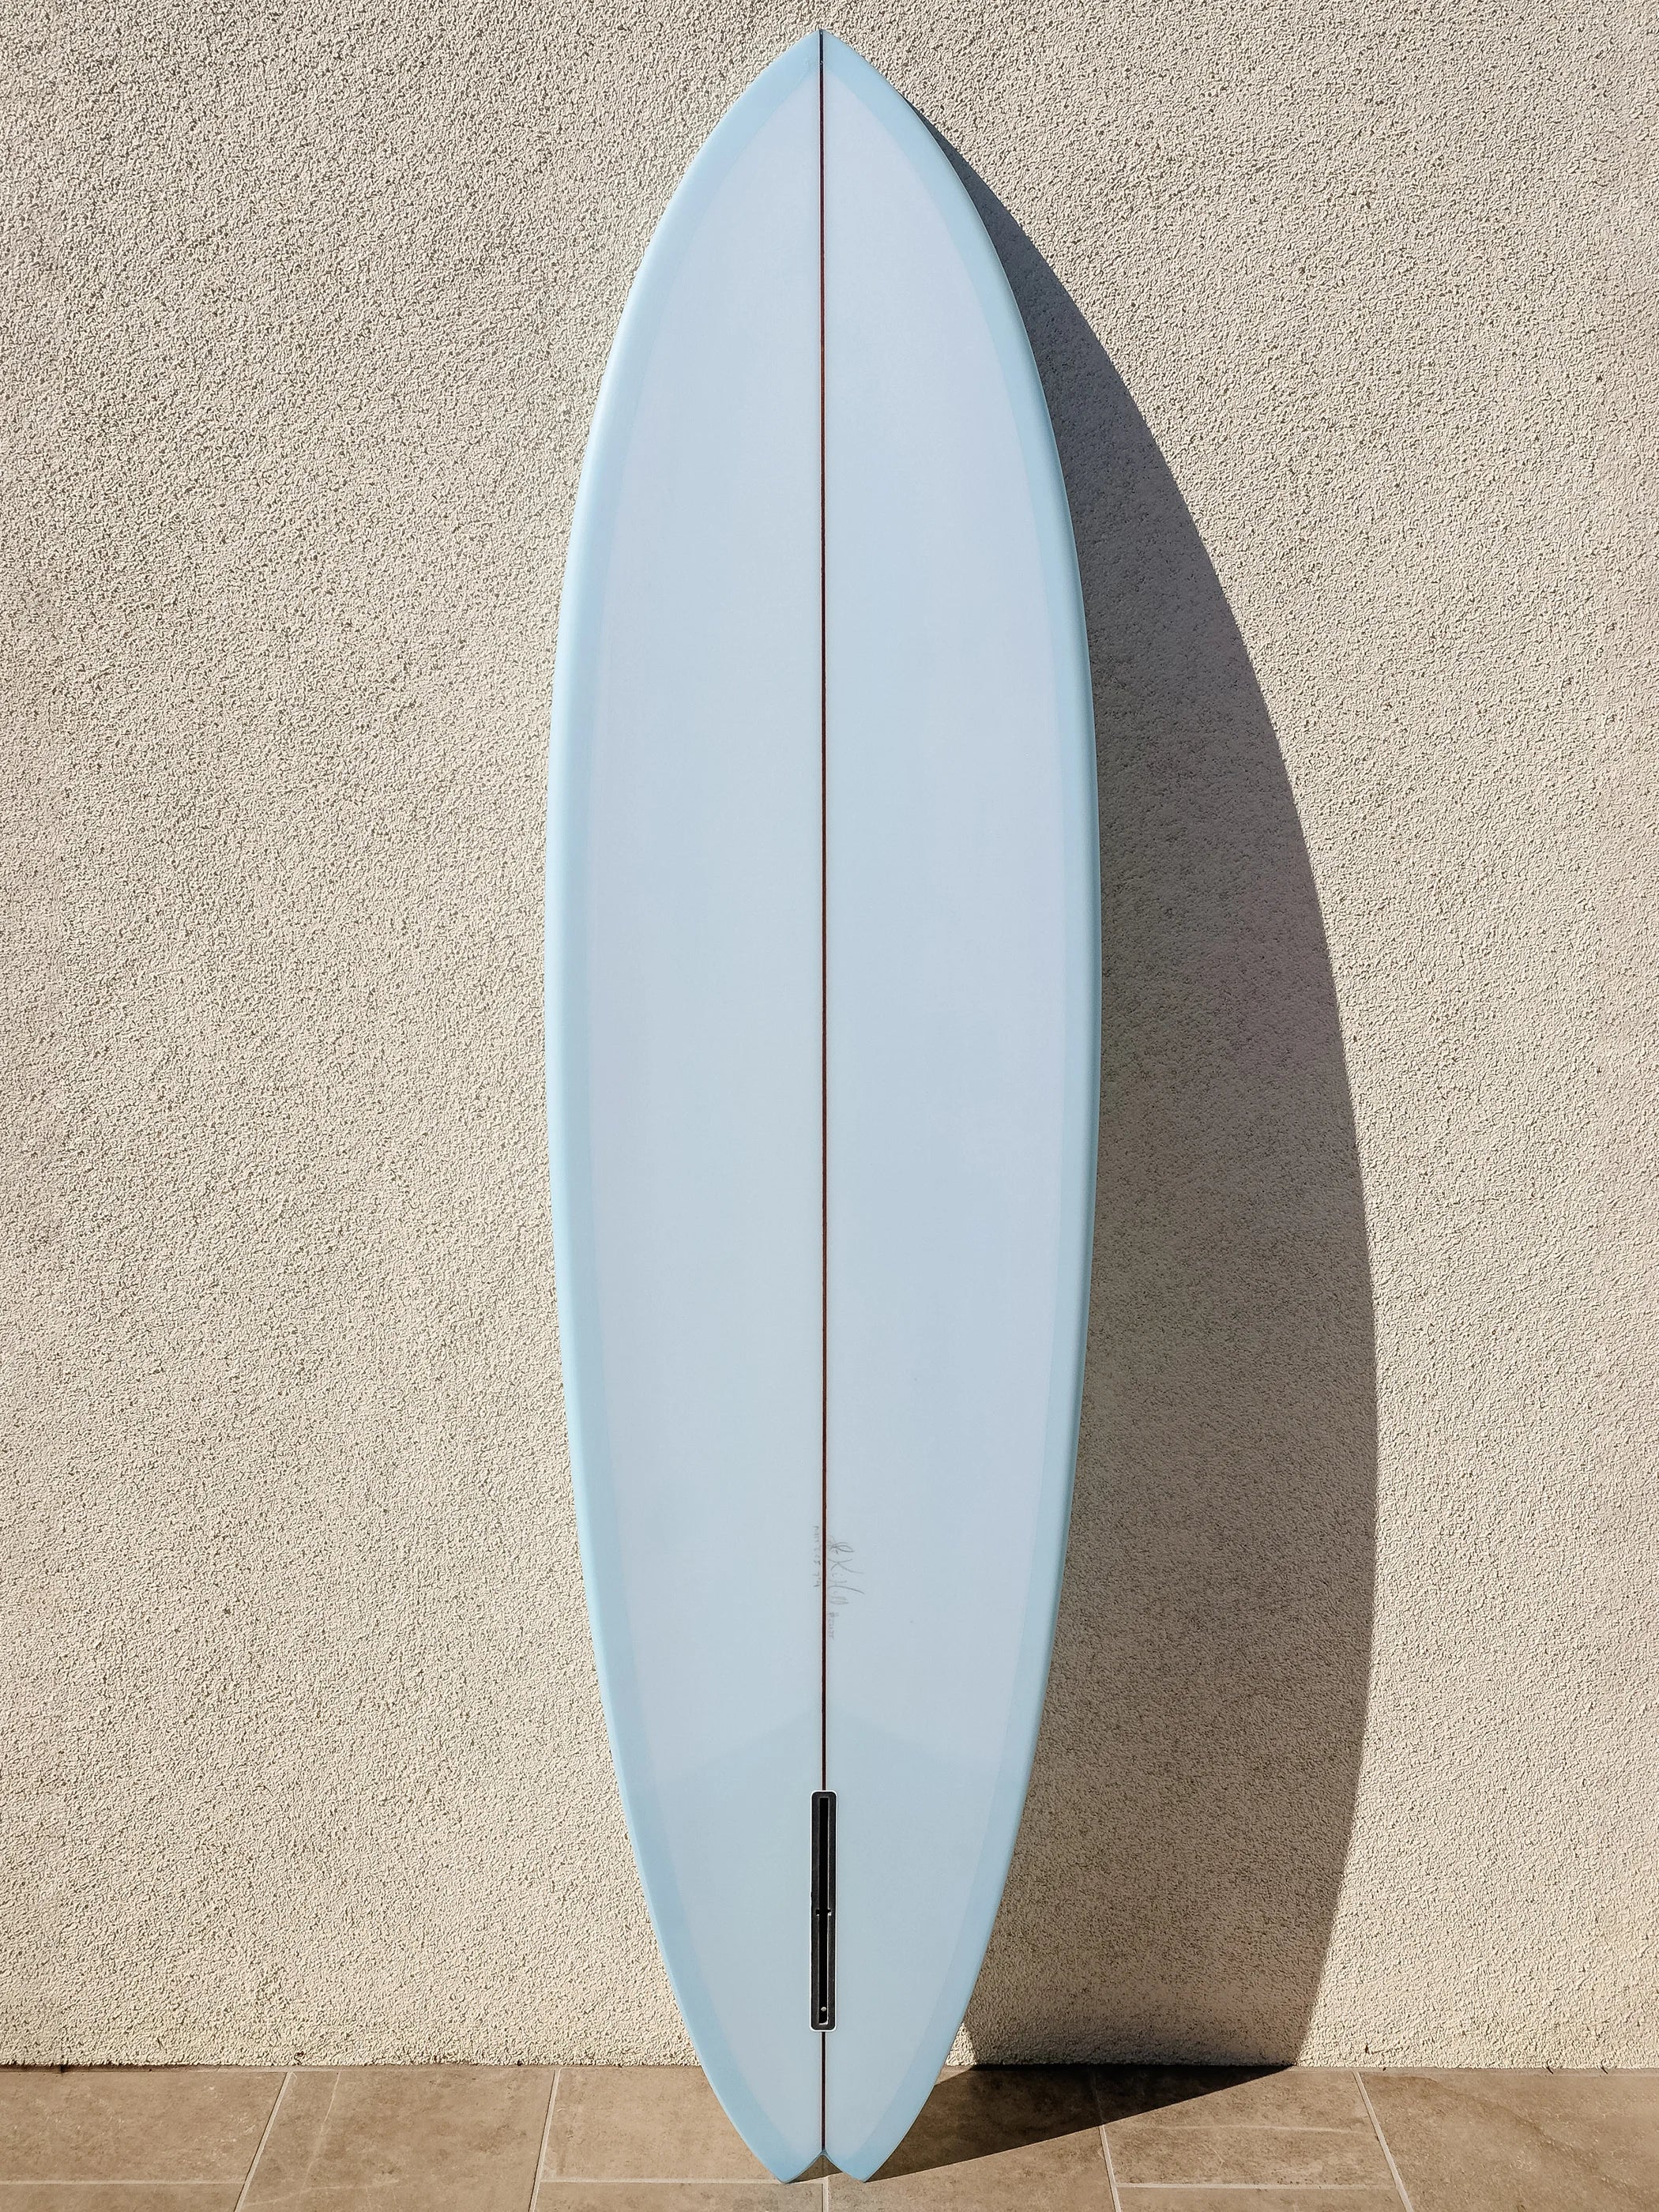 Kris Hall | 7’4” New Speedway Boogie Swallow Glacier Surfboard